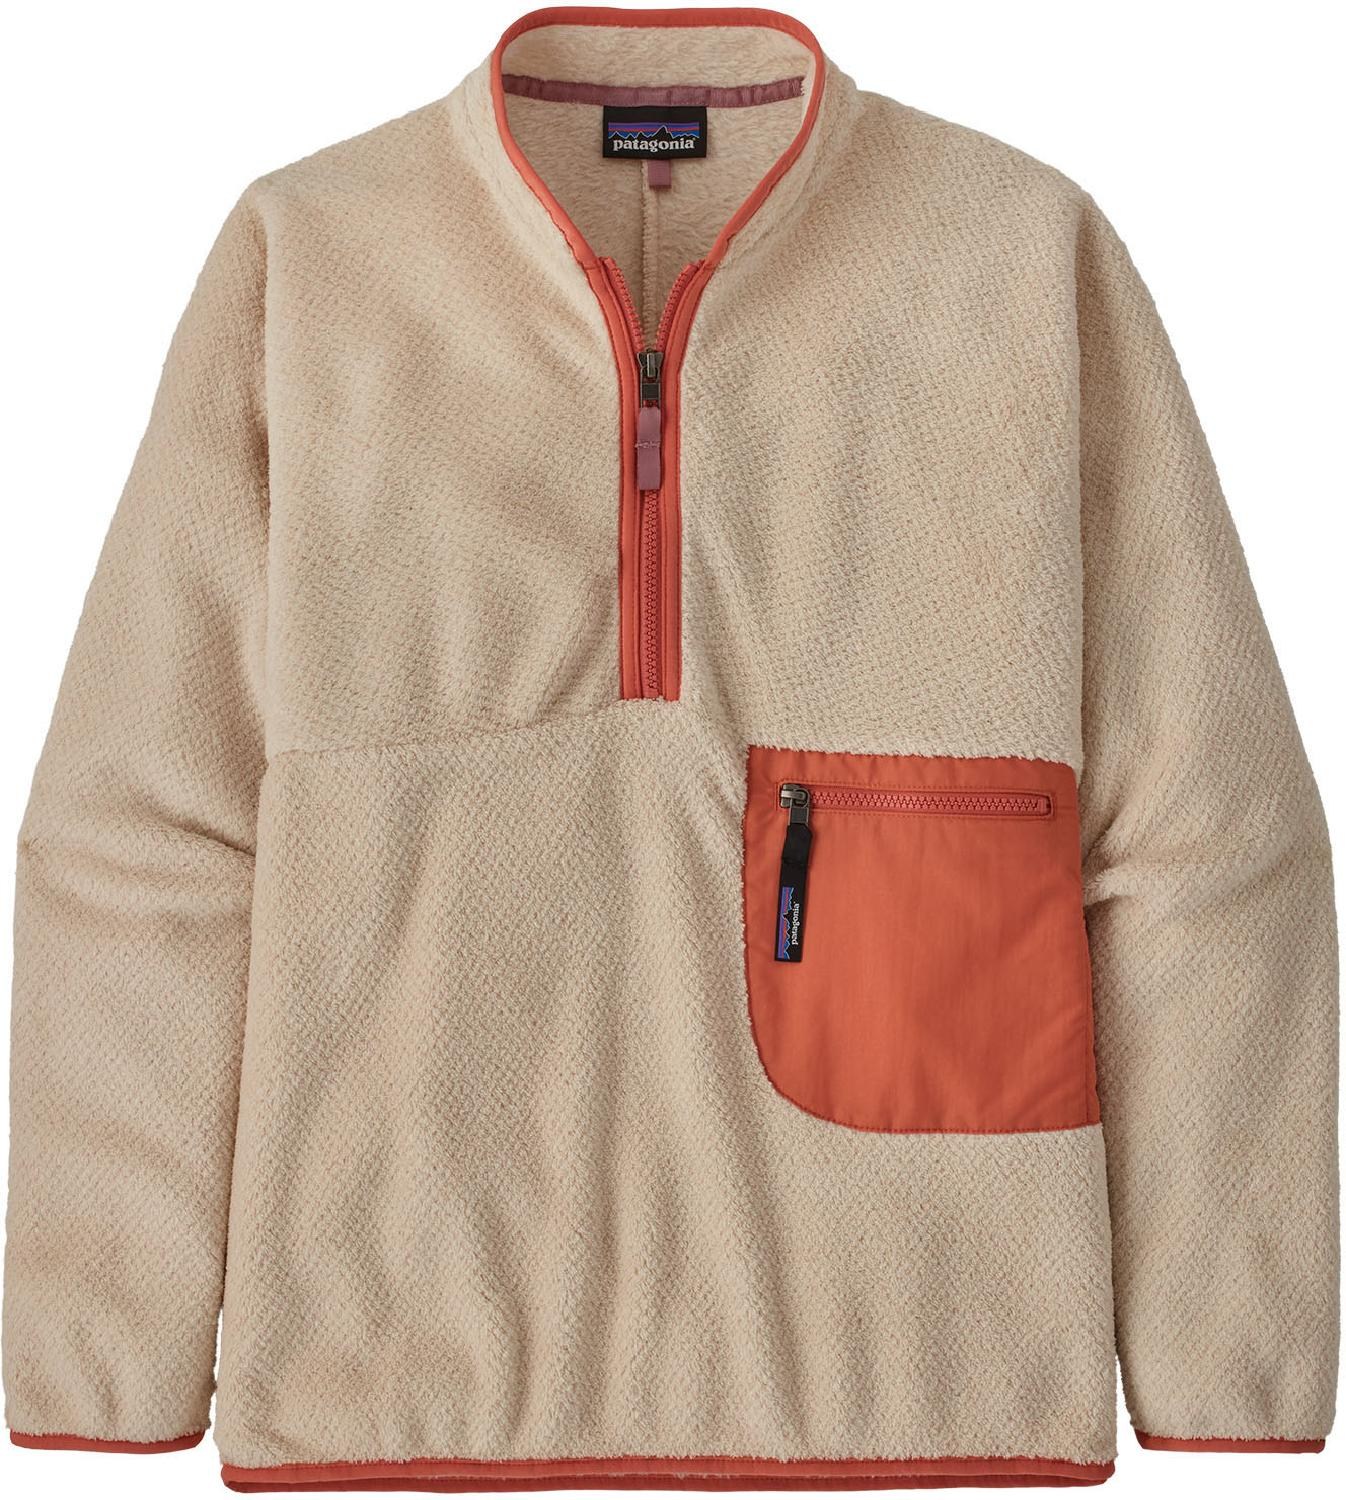 Пуловер Re-Tool с молнией до половины — женский Patagonia, хаки